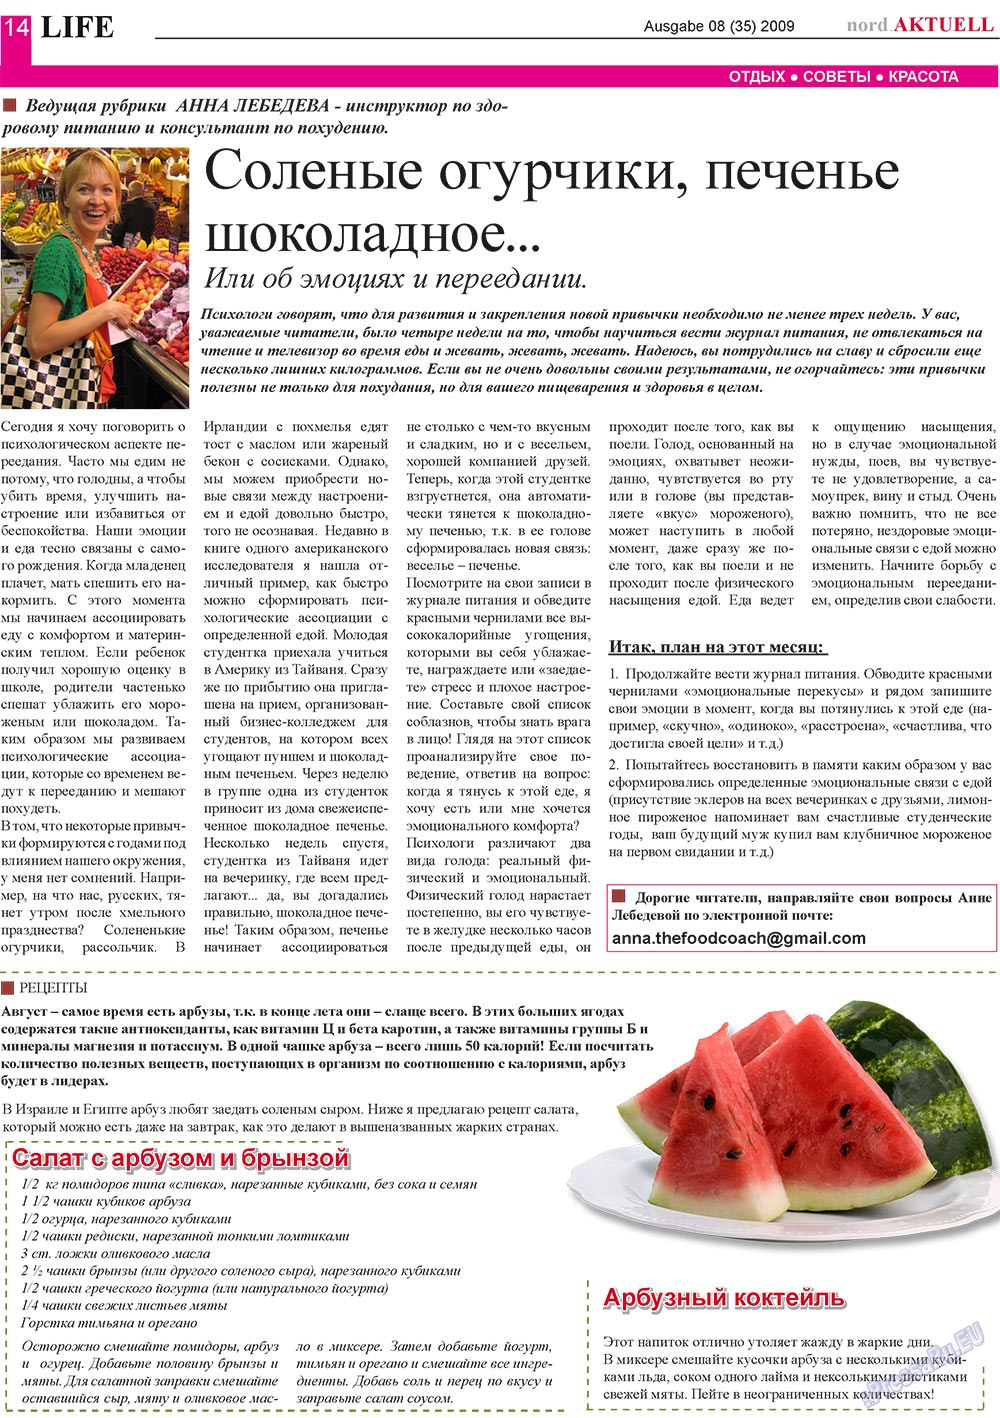 nord.Aktuell, газета. 2009 №8 стр.14